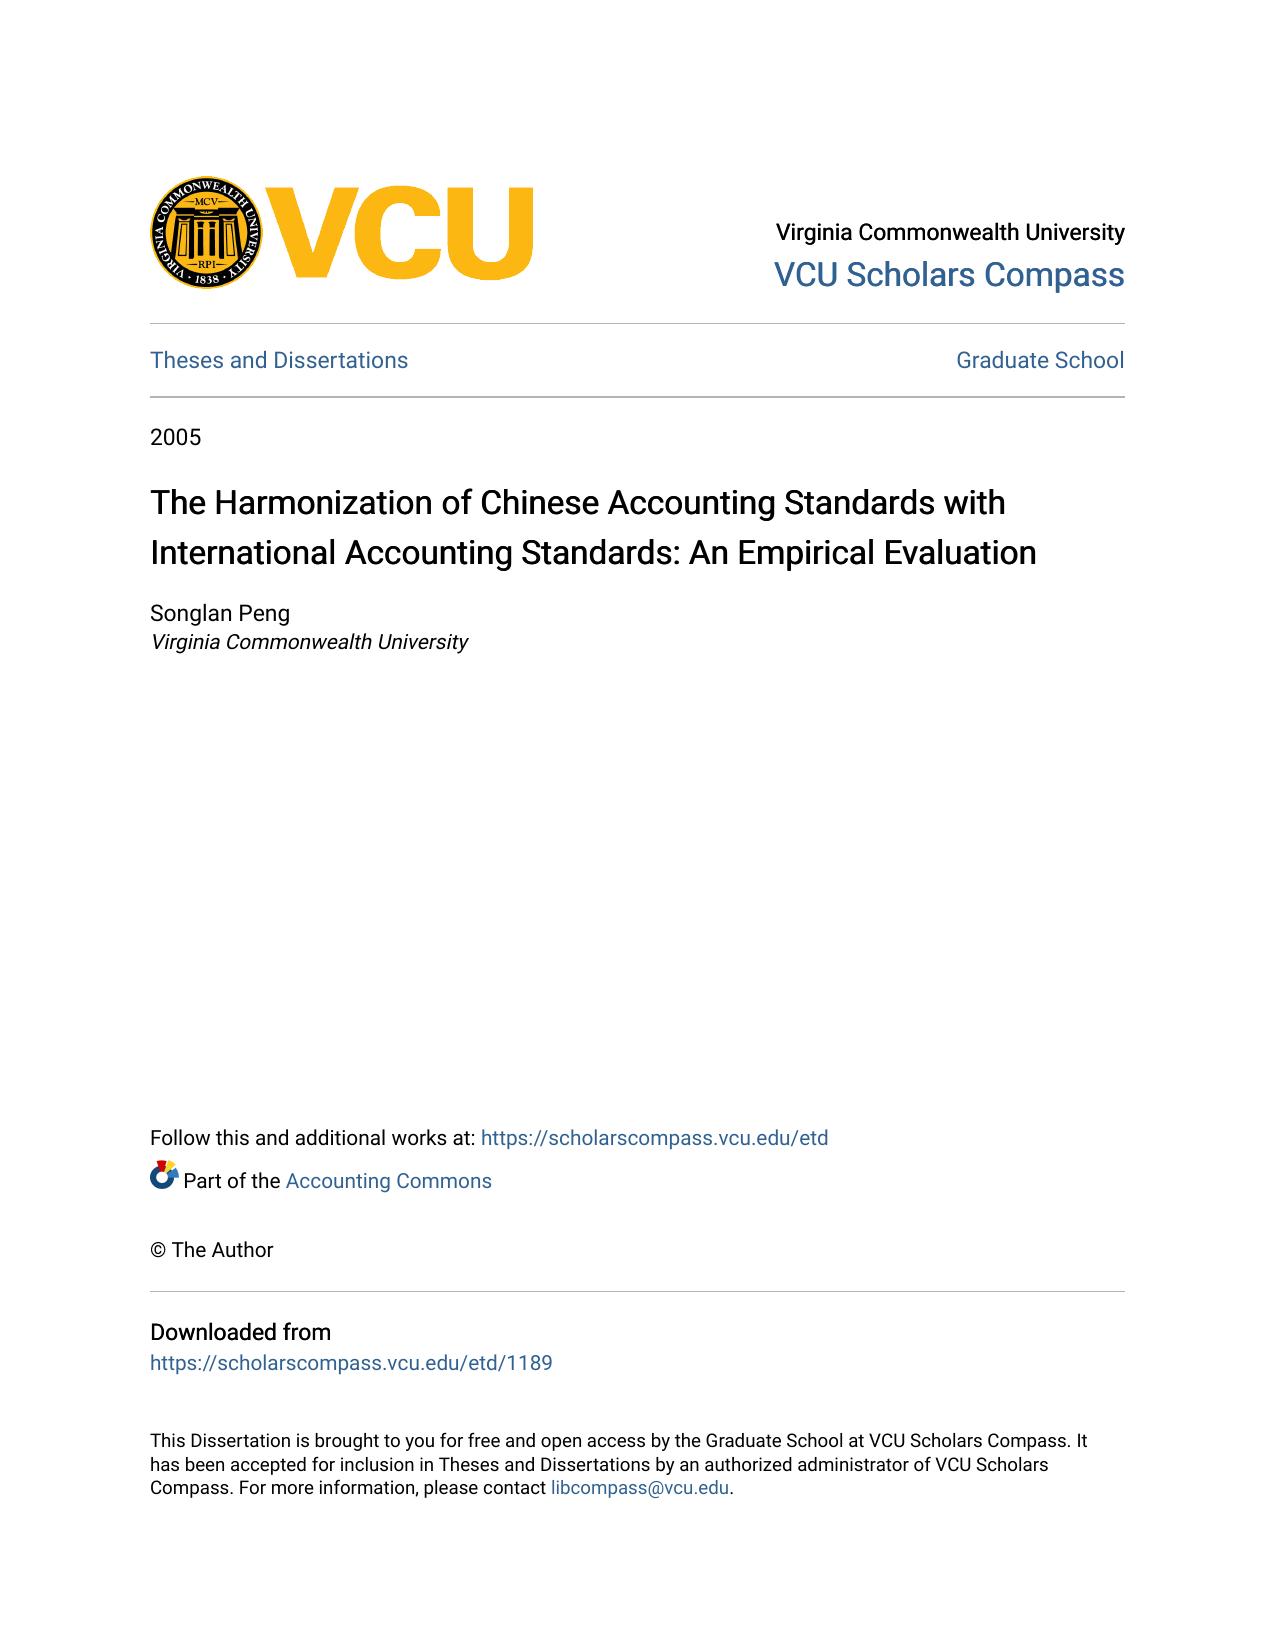 The Harmonization of Chinese Accounting Standards with International Accounting Standards: An Empirical Evaluation